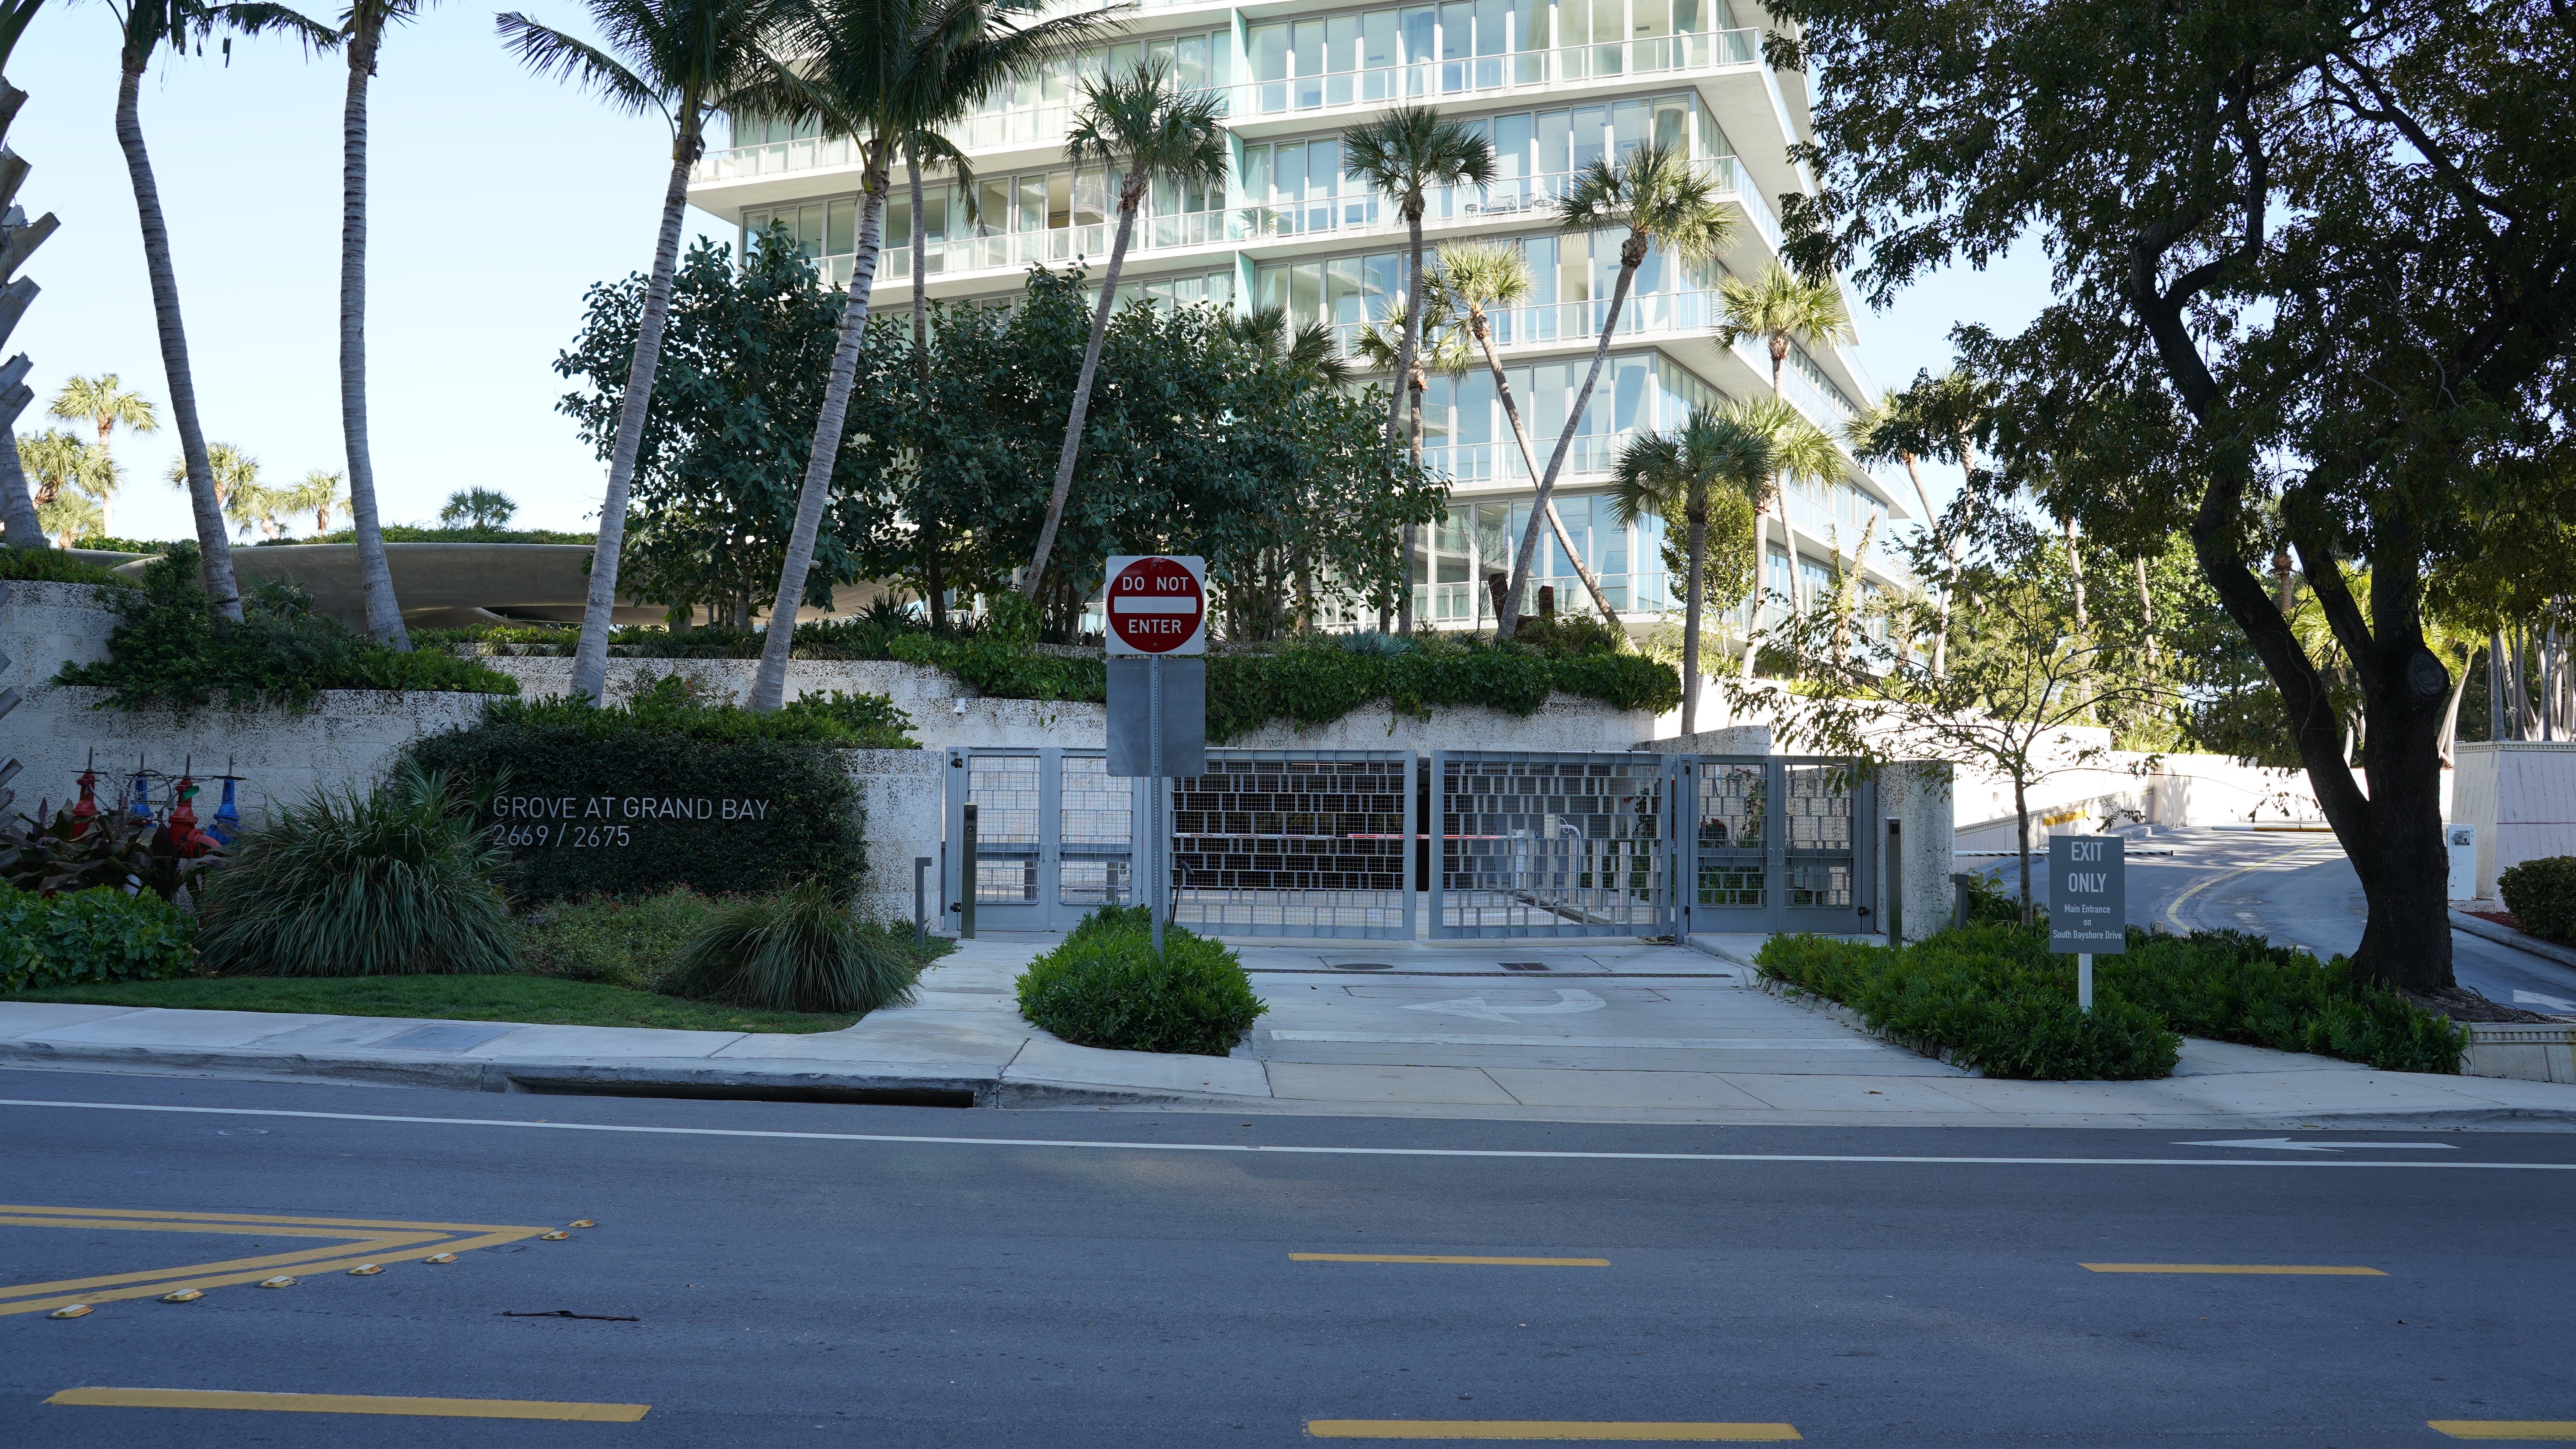 Grove at Grand Bay building at 2675 South Bayshore Drive, The Grove, Miami, FL 33133